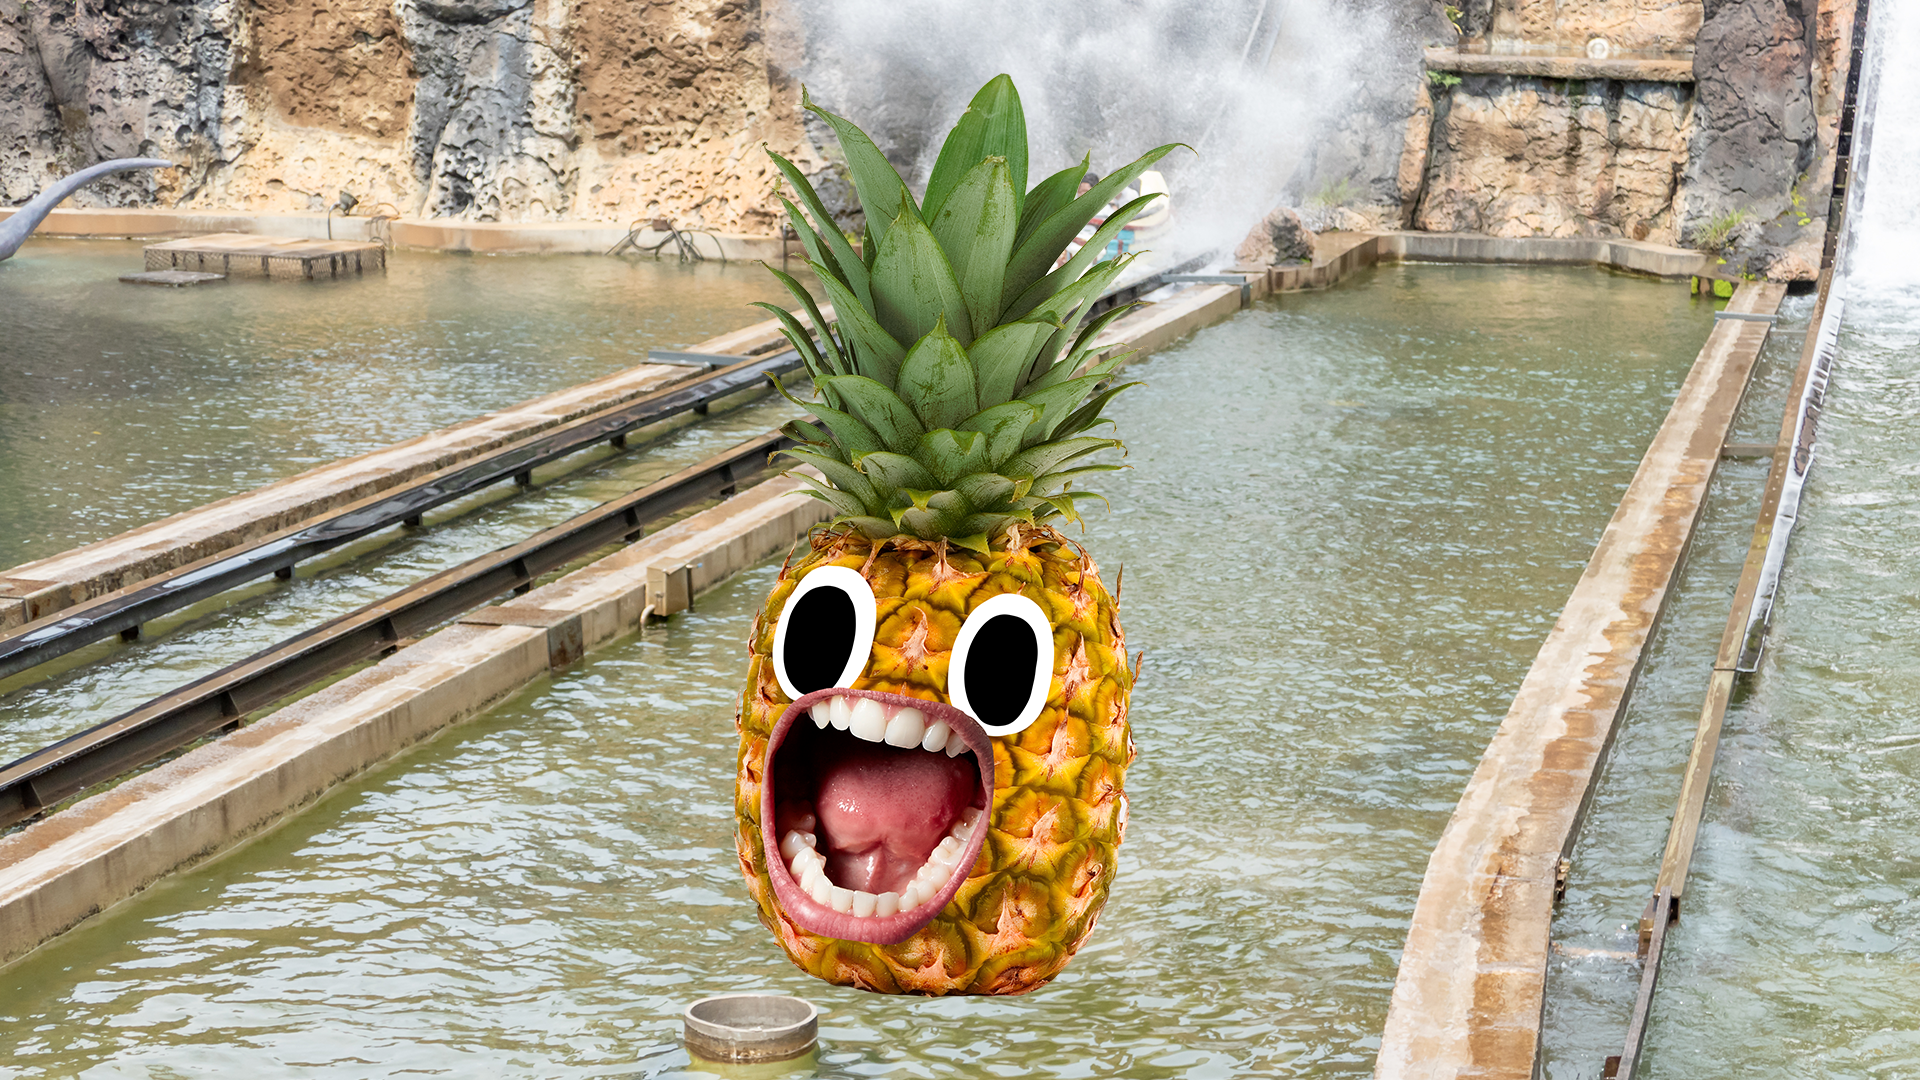 Splash ride with pineapple